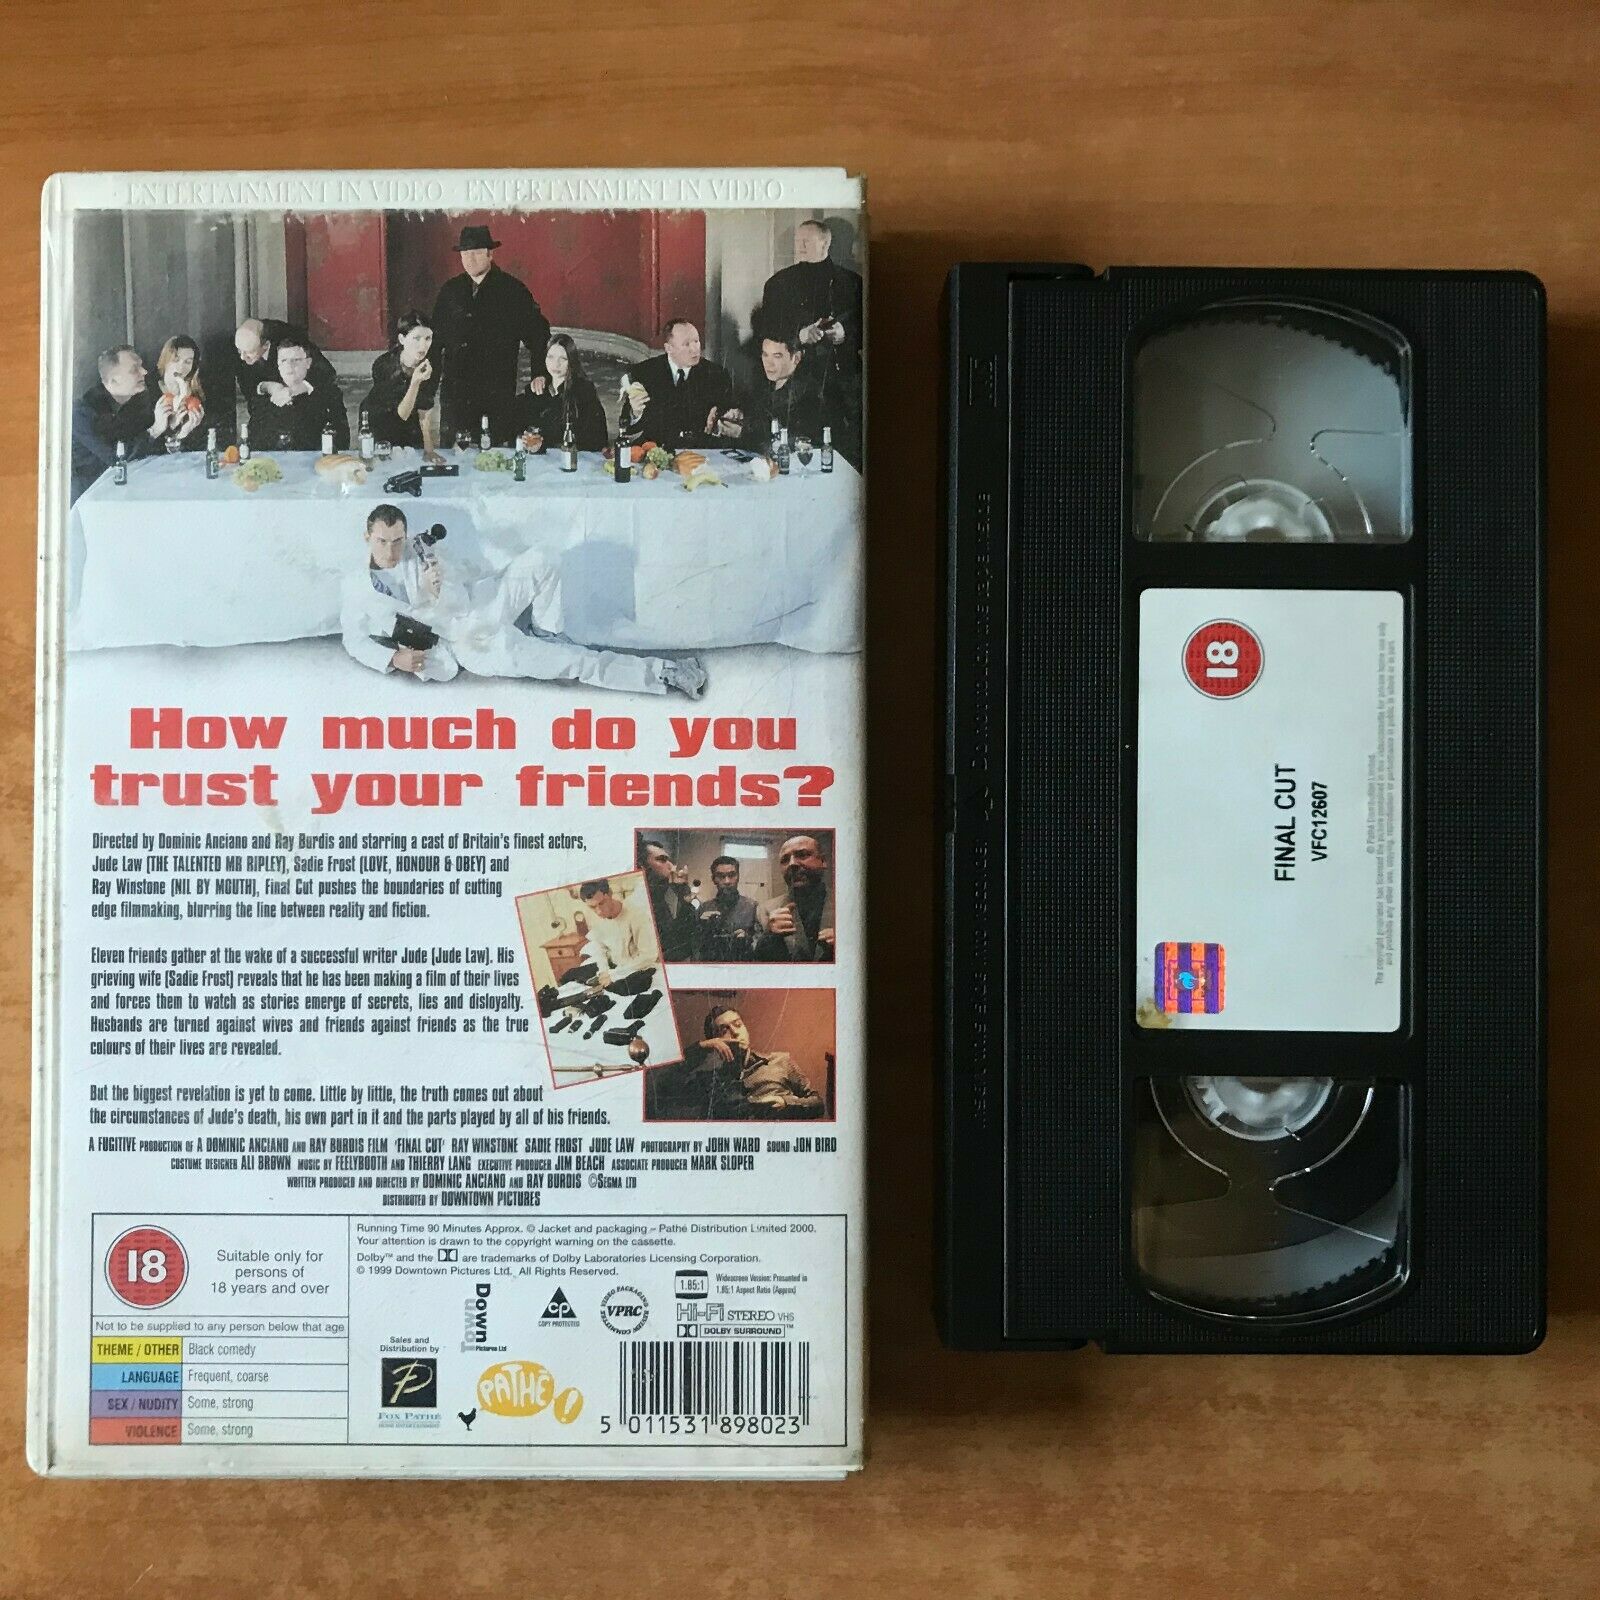 Final Cut (1998): Drama - Thriller - Large Box - Jude Law / Ray Winstone - VHS-